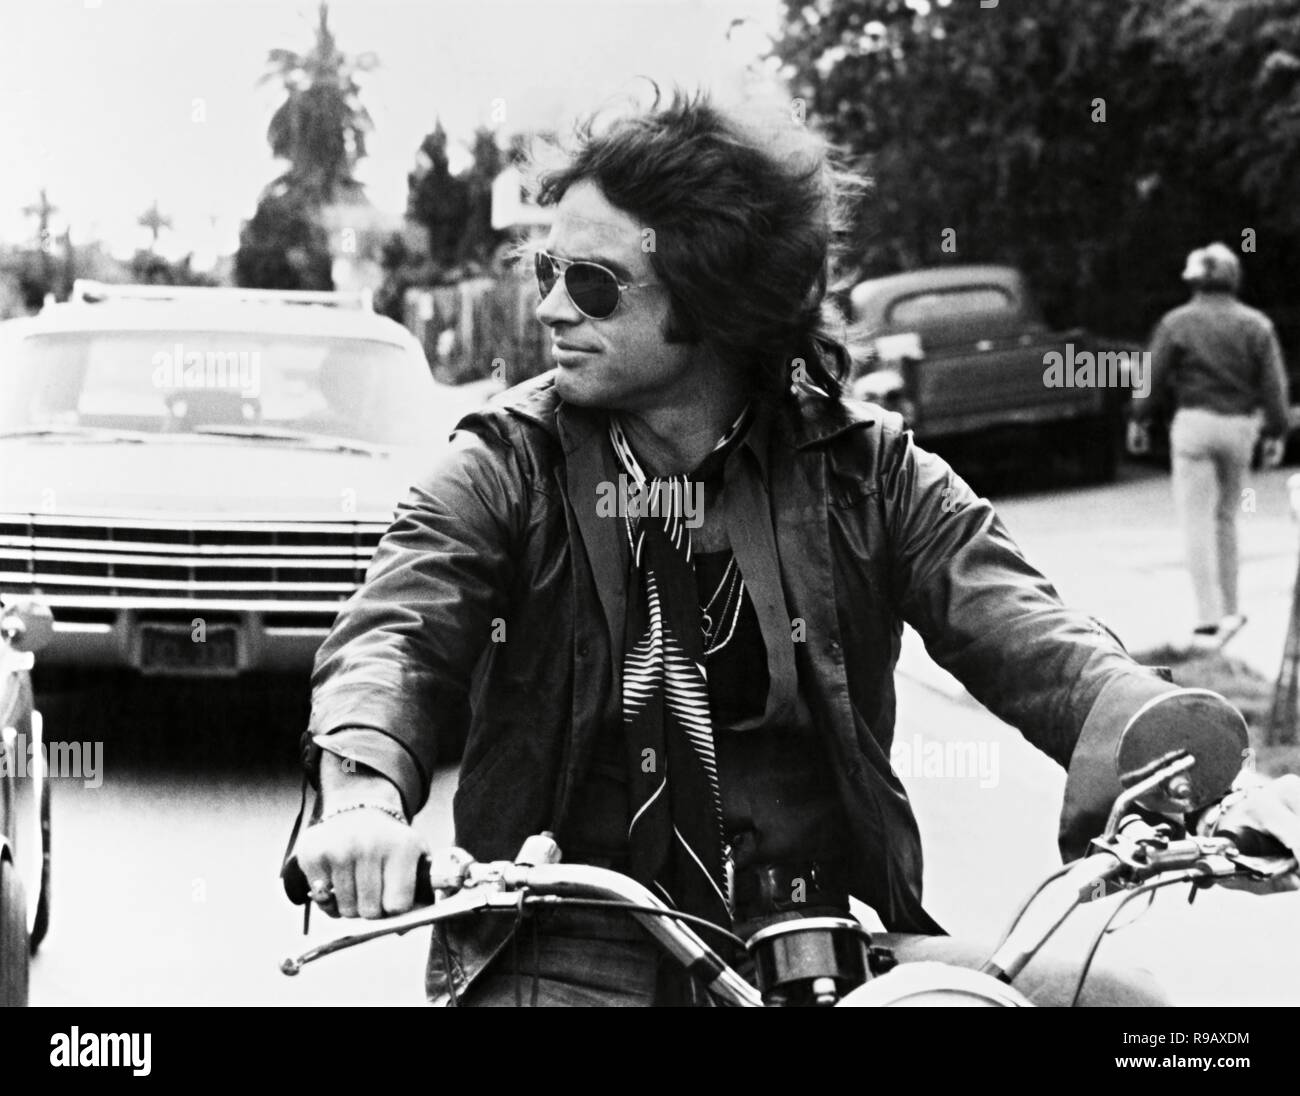 Original film title: SHAMPOO. English title: SHAMPOO. Year: 1975. Director: HAL ASHBY. Stars: WARREN BEATTY. Credit: COLUMBIA PICTURES / Album Stock Photo